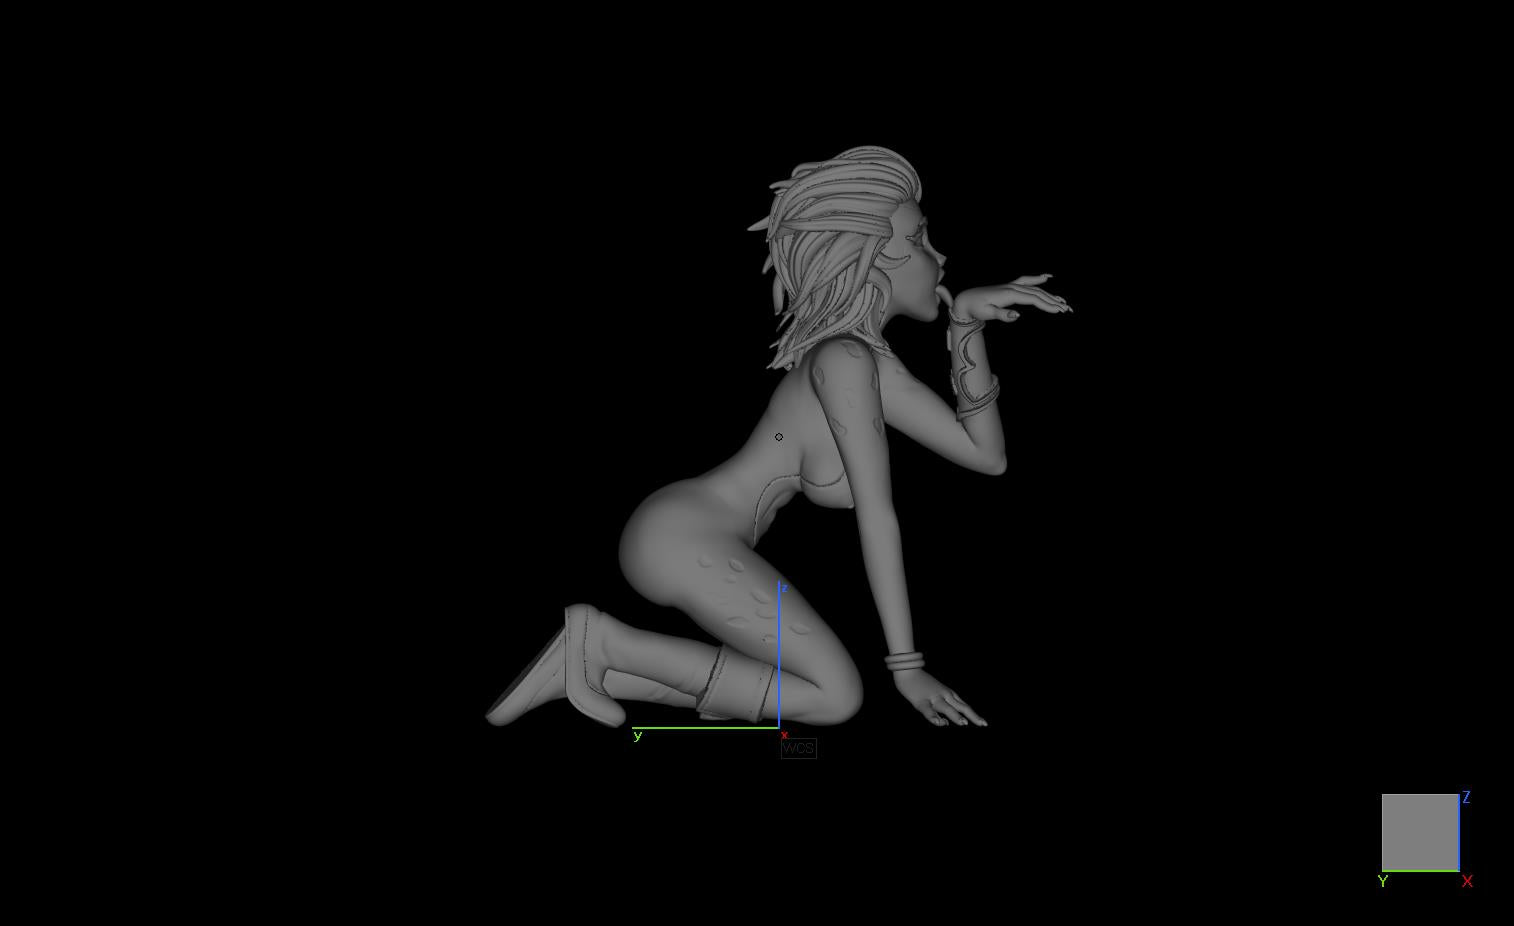 Cheetara ThunderCats| NSFW 3D Printed | Fun Art | Unpainted | Figurine